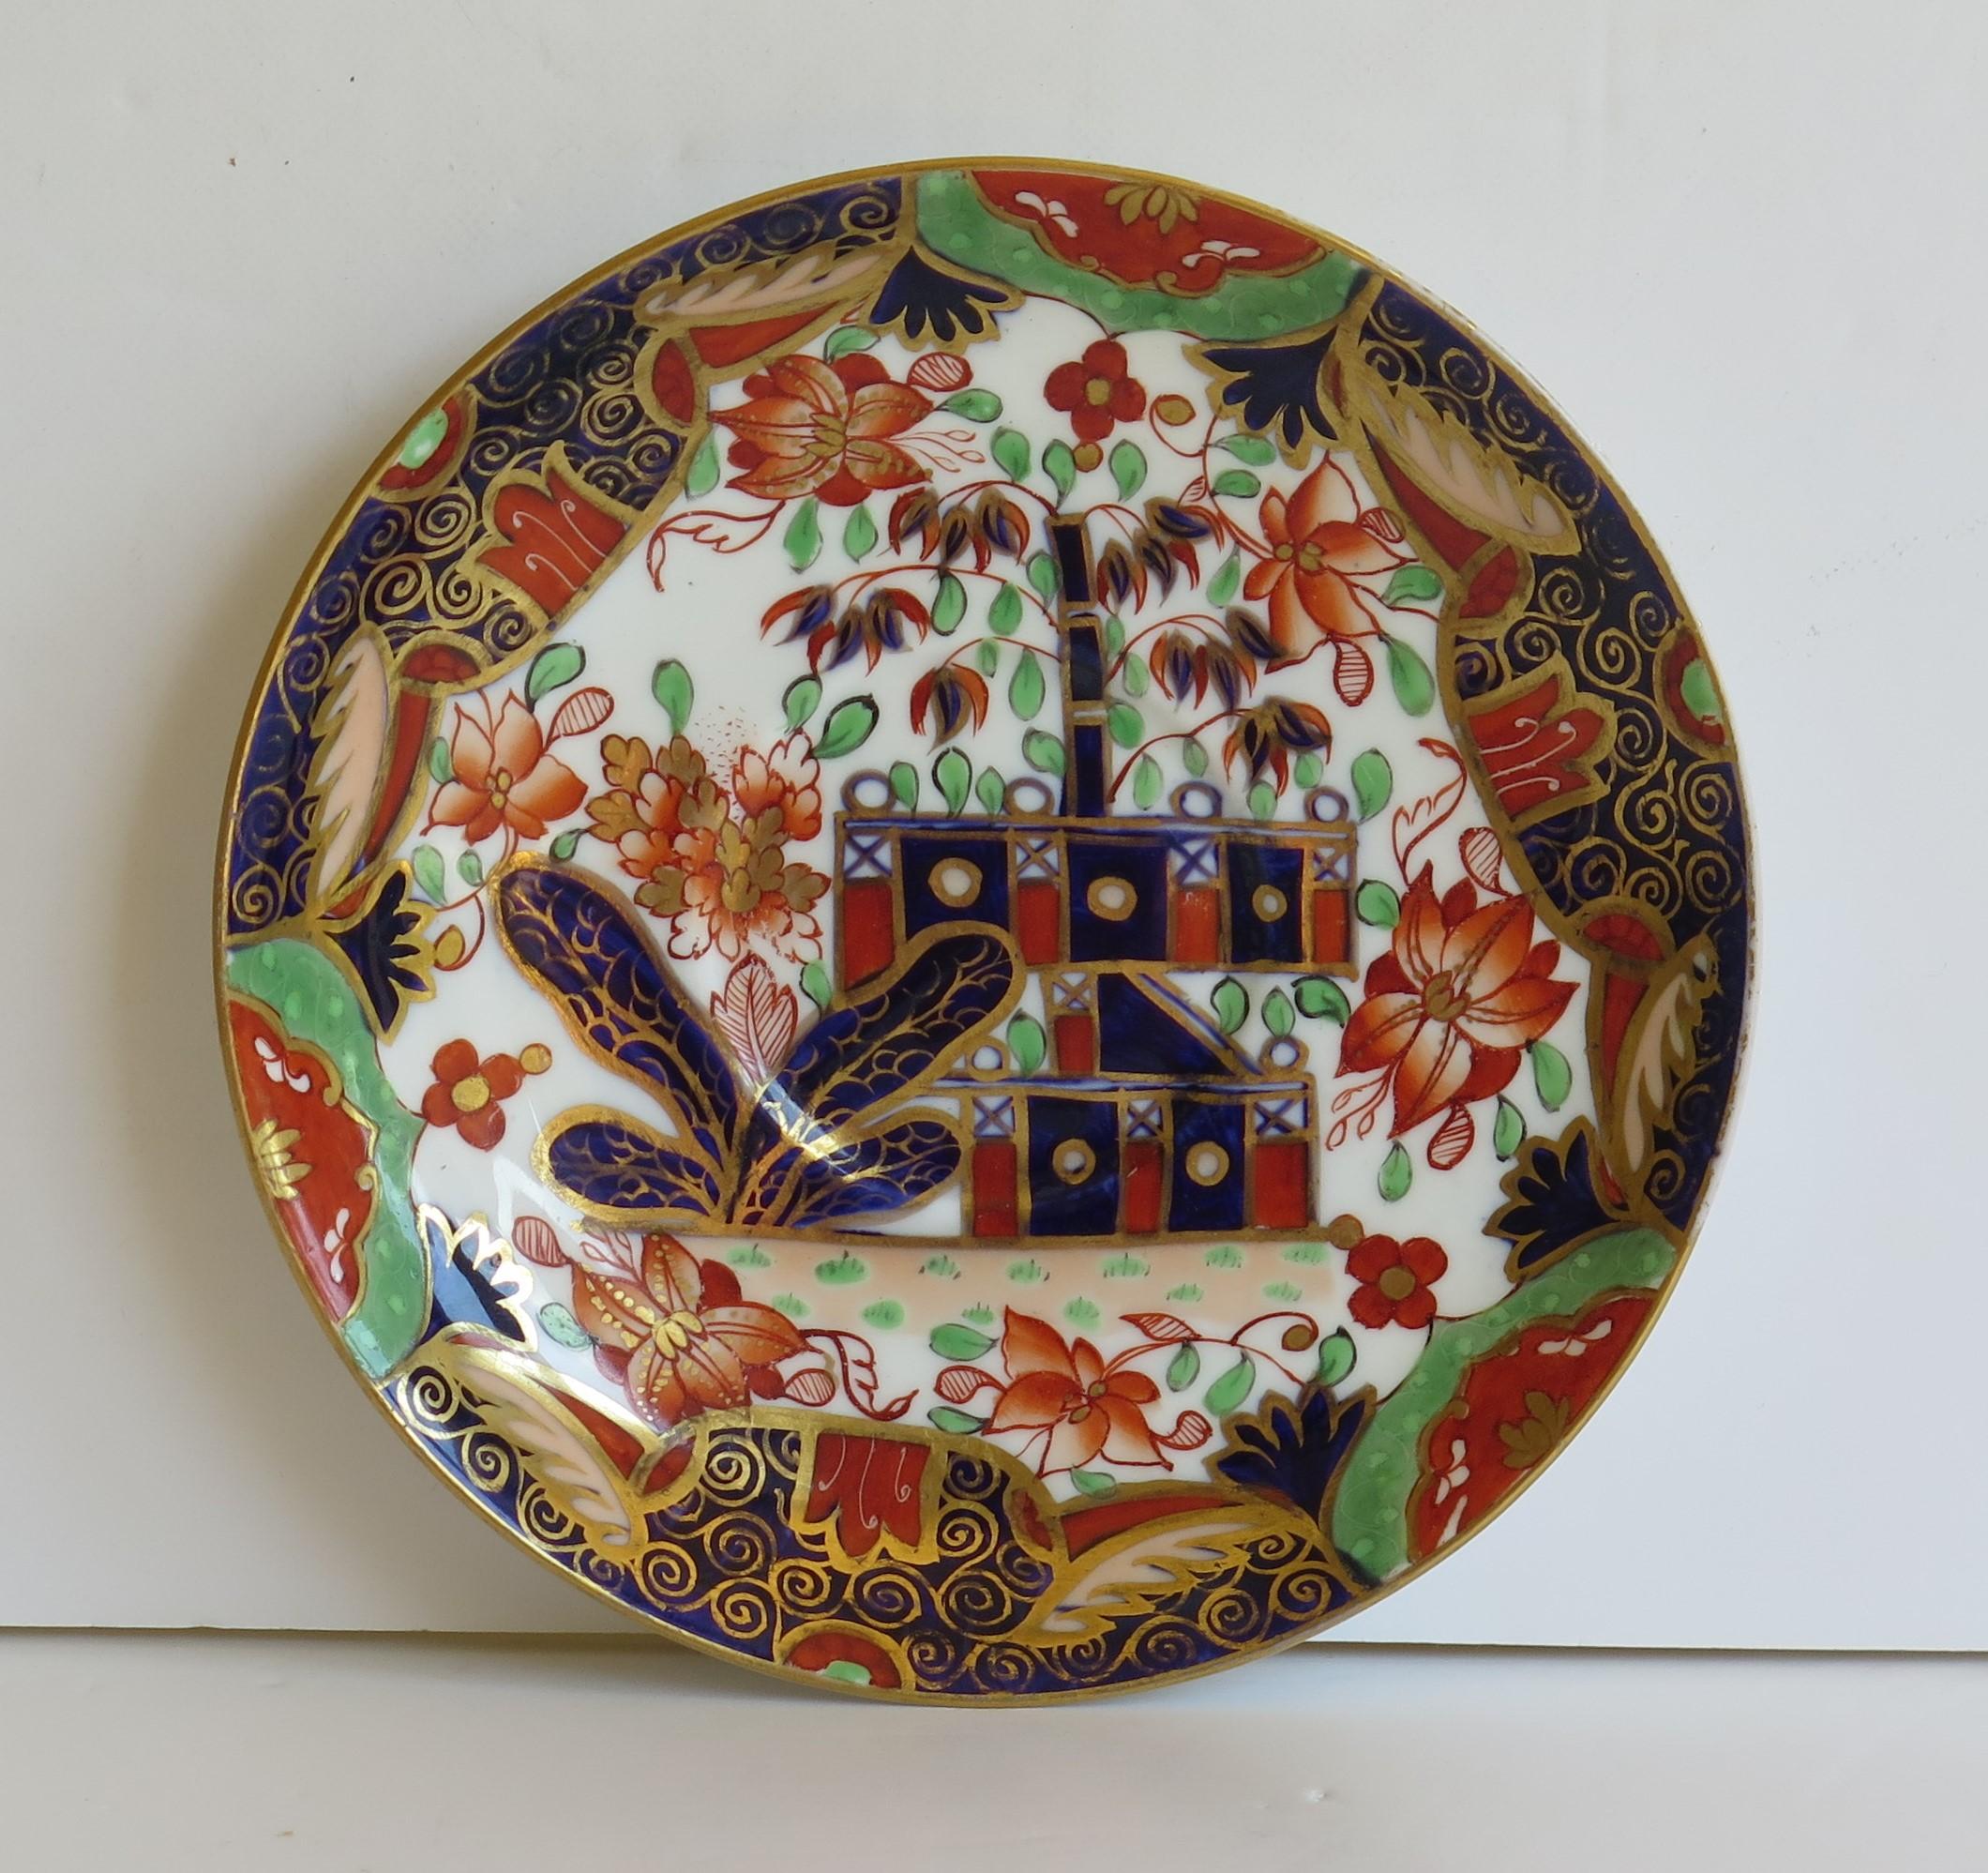 English Porcelain Saucer Dish by Copeland 'Spode' in Imari Fence Ptn No. 794, circa 1850